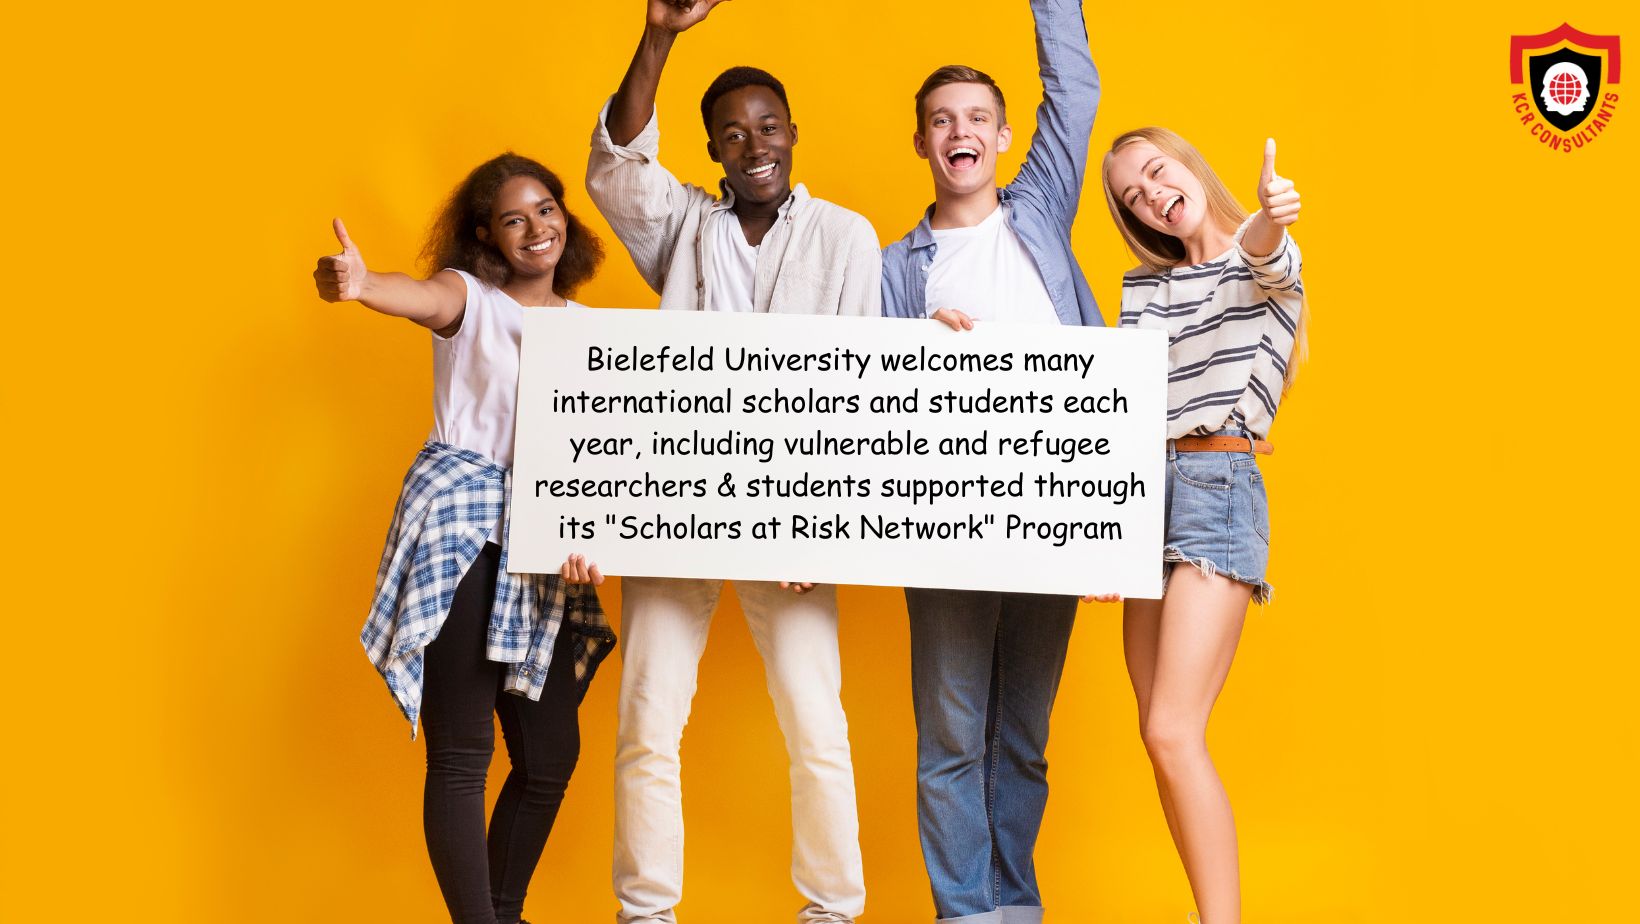 BIELEFELD UNIVERSITY - International Students - KCR CONSULTANTS